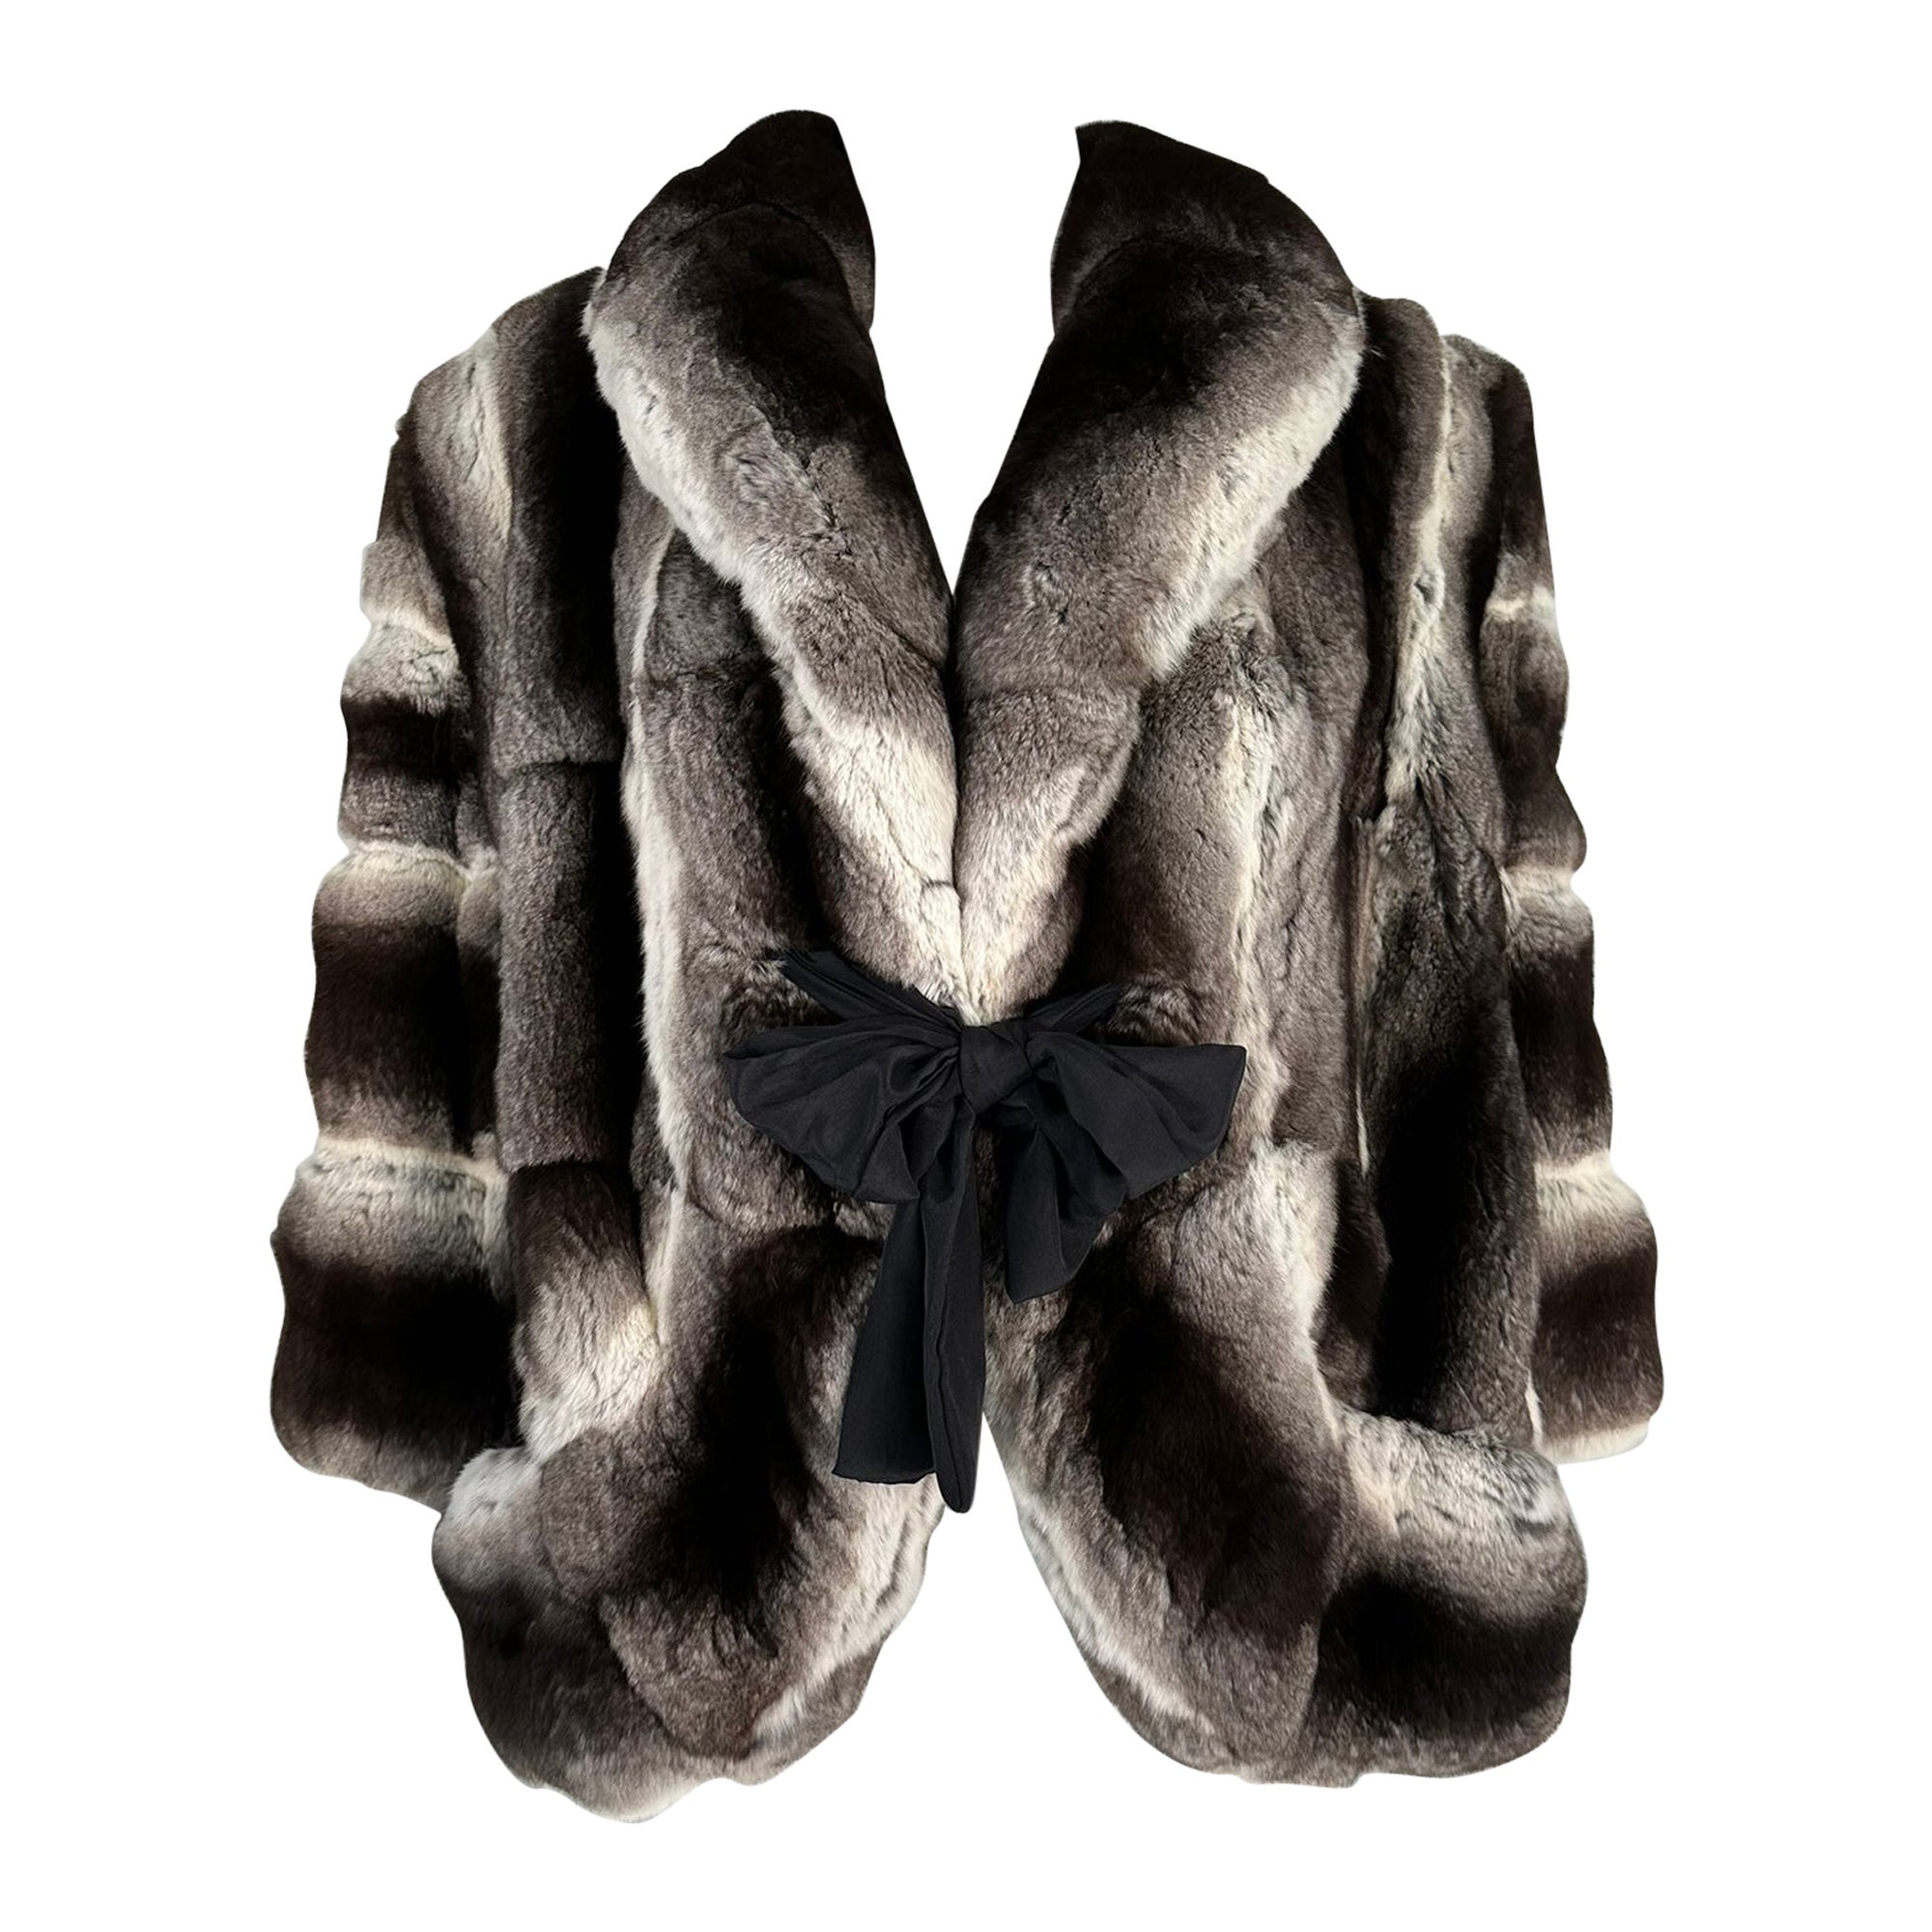 Dennis Basso Chinchilla Fur Jacket in Light & Dark Grey with Cream 2013 S-M 2013 For Sale